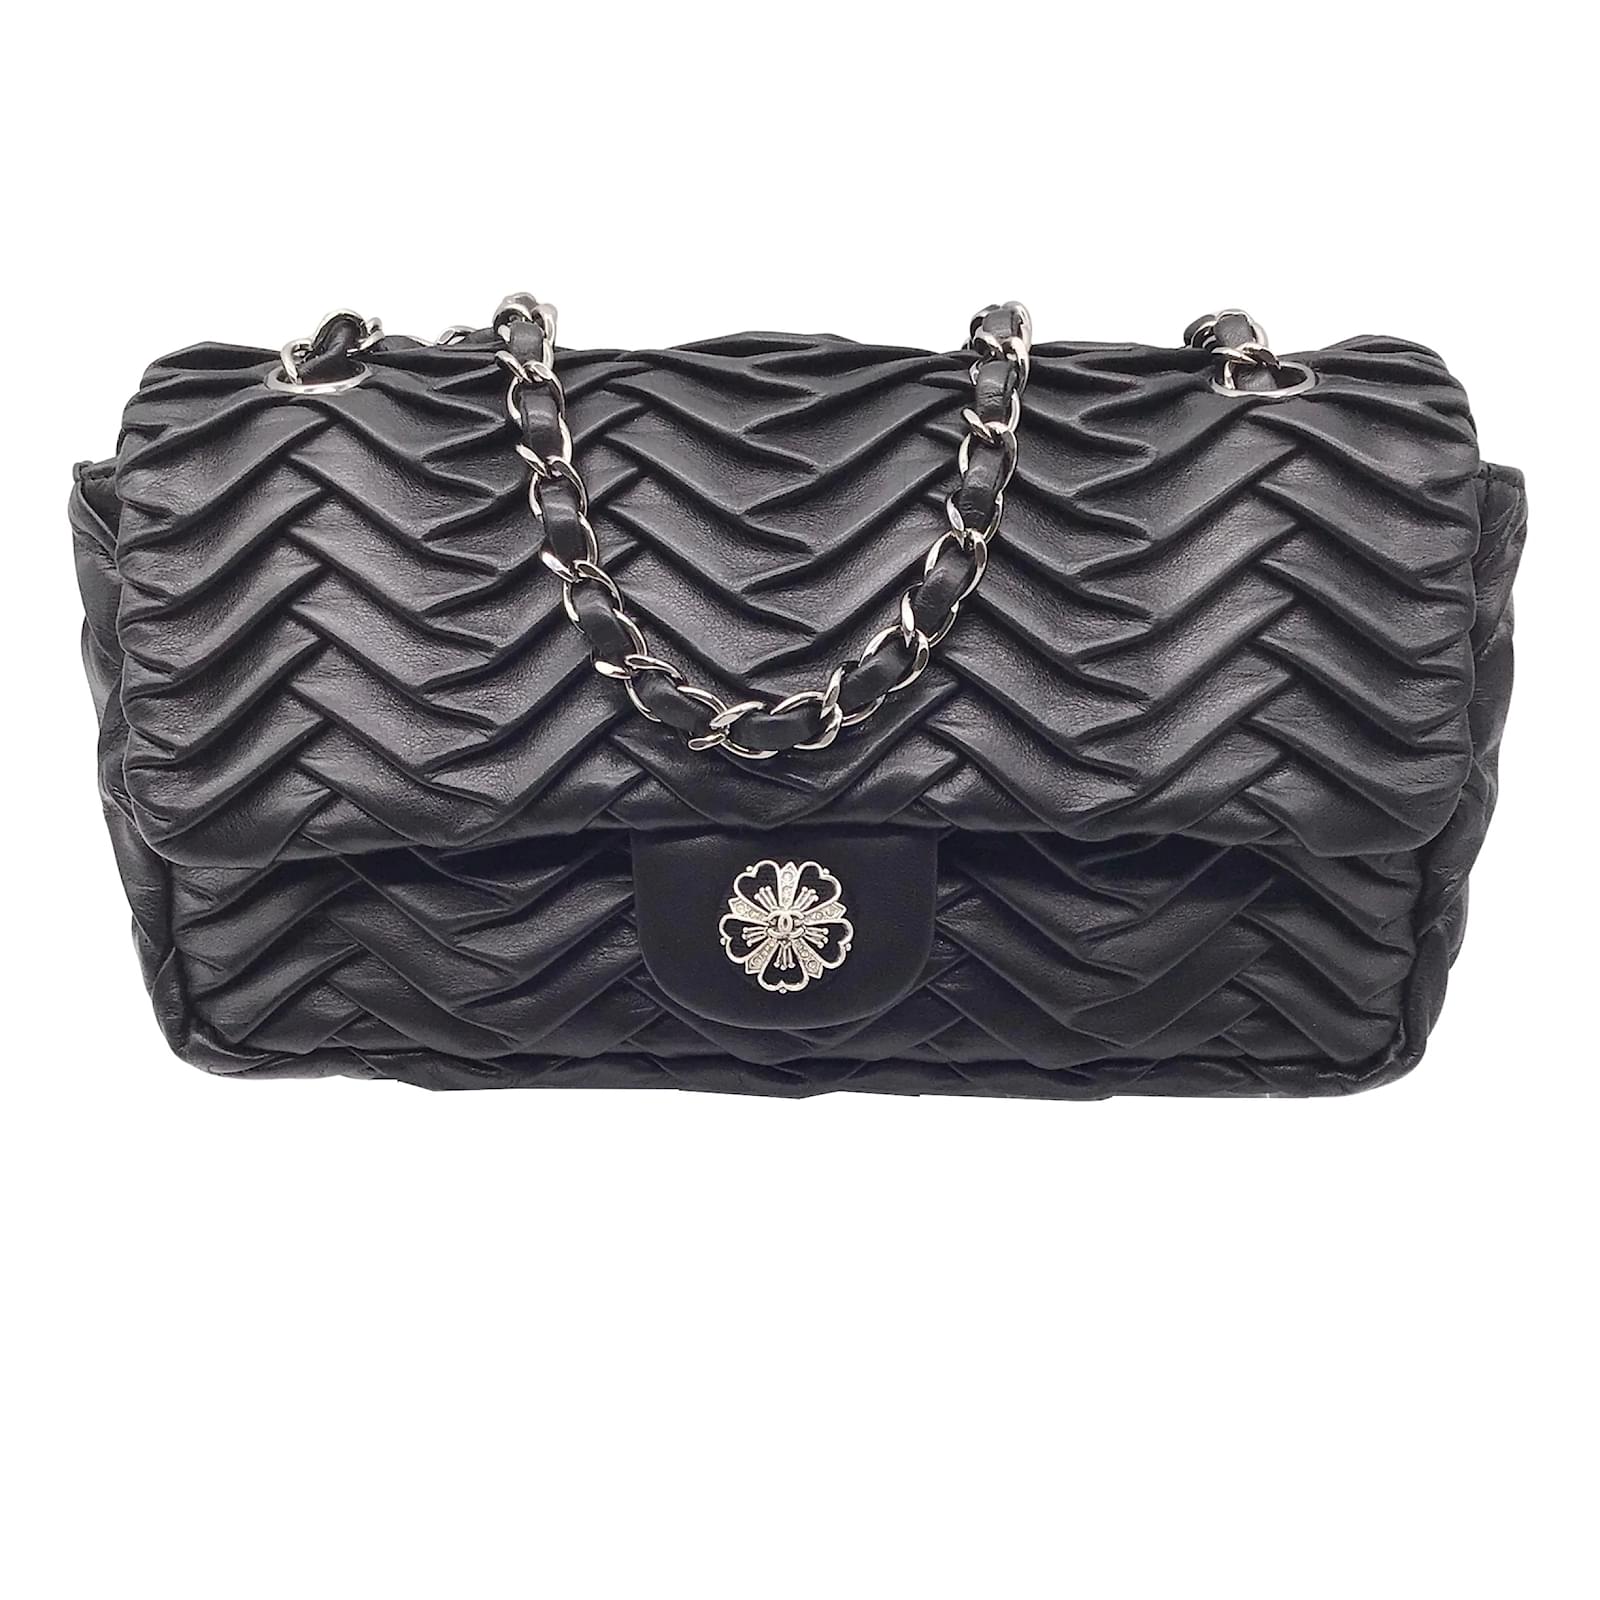 Handbags Chanel Chanel Classic Flap 2007 Pleated Black Lambskin Leather Shoulder Bag